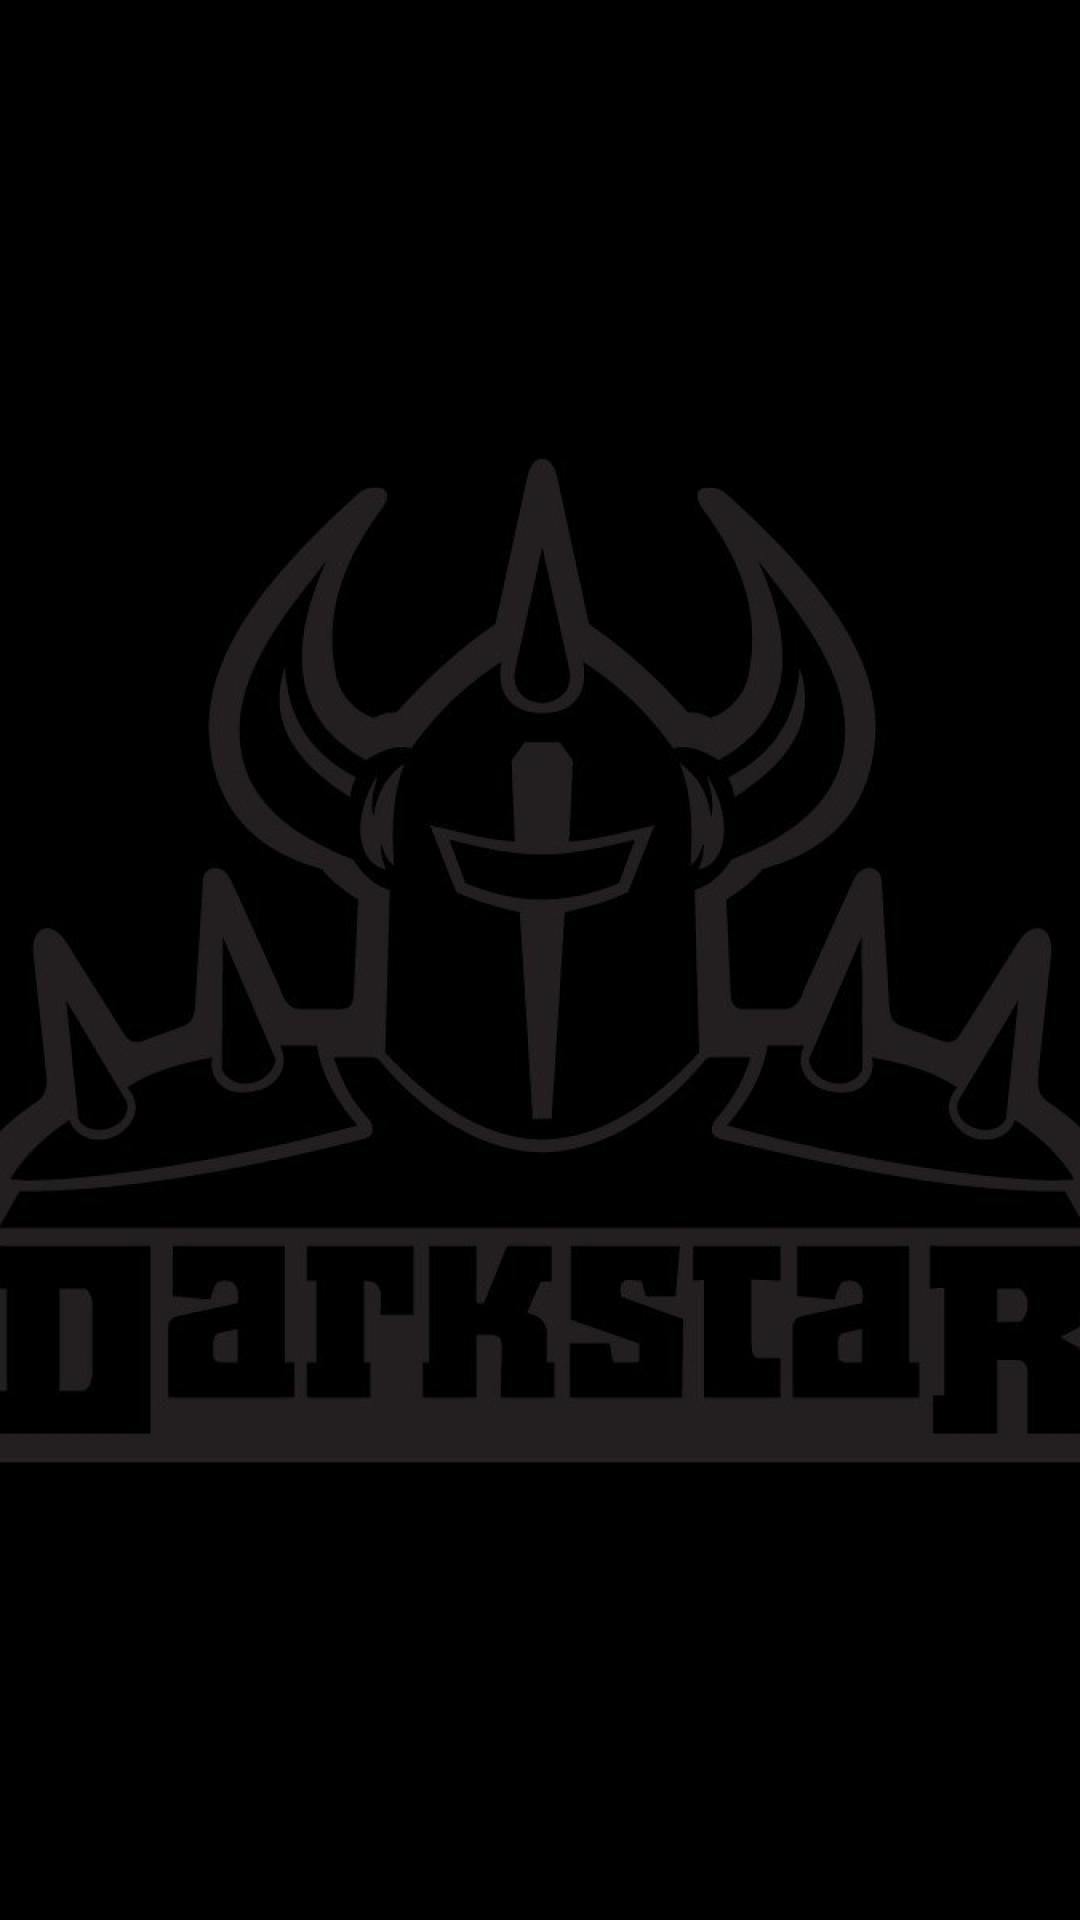 Skateboards brands logos skate darkstar wallpaper